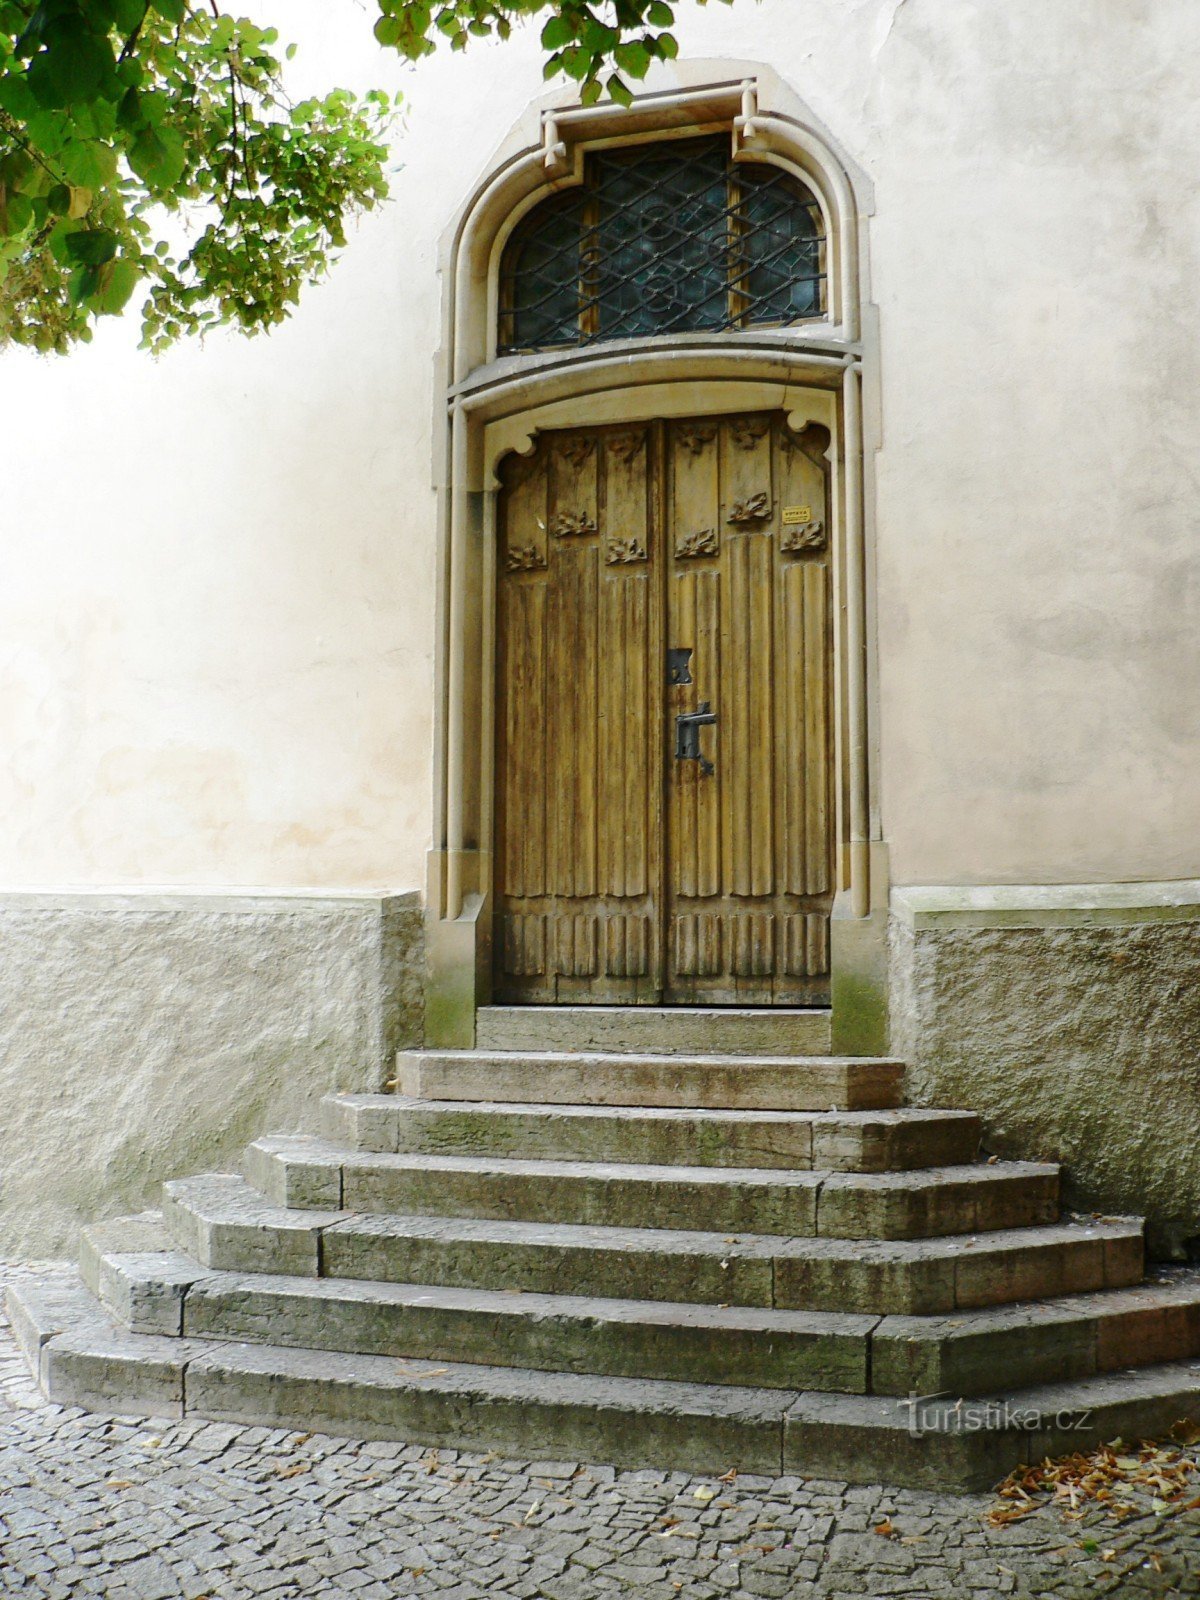 entrada na sacristia da igreja, que foi inaugurada a partir de 1901, segundo